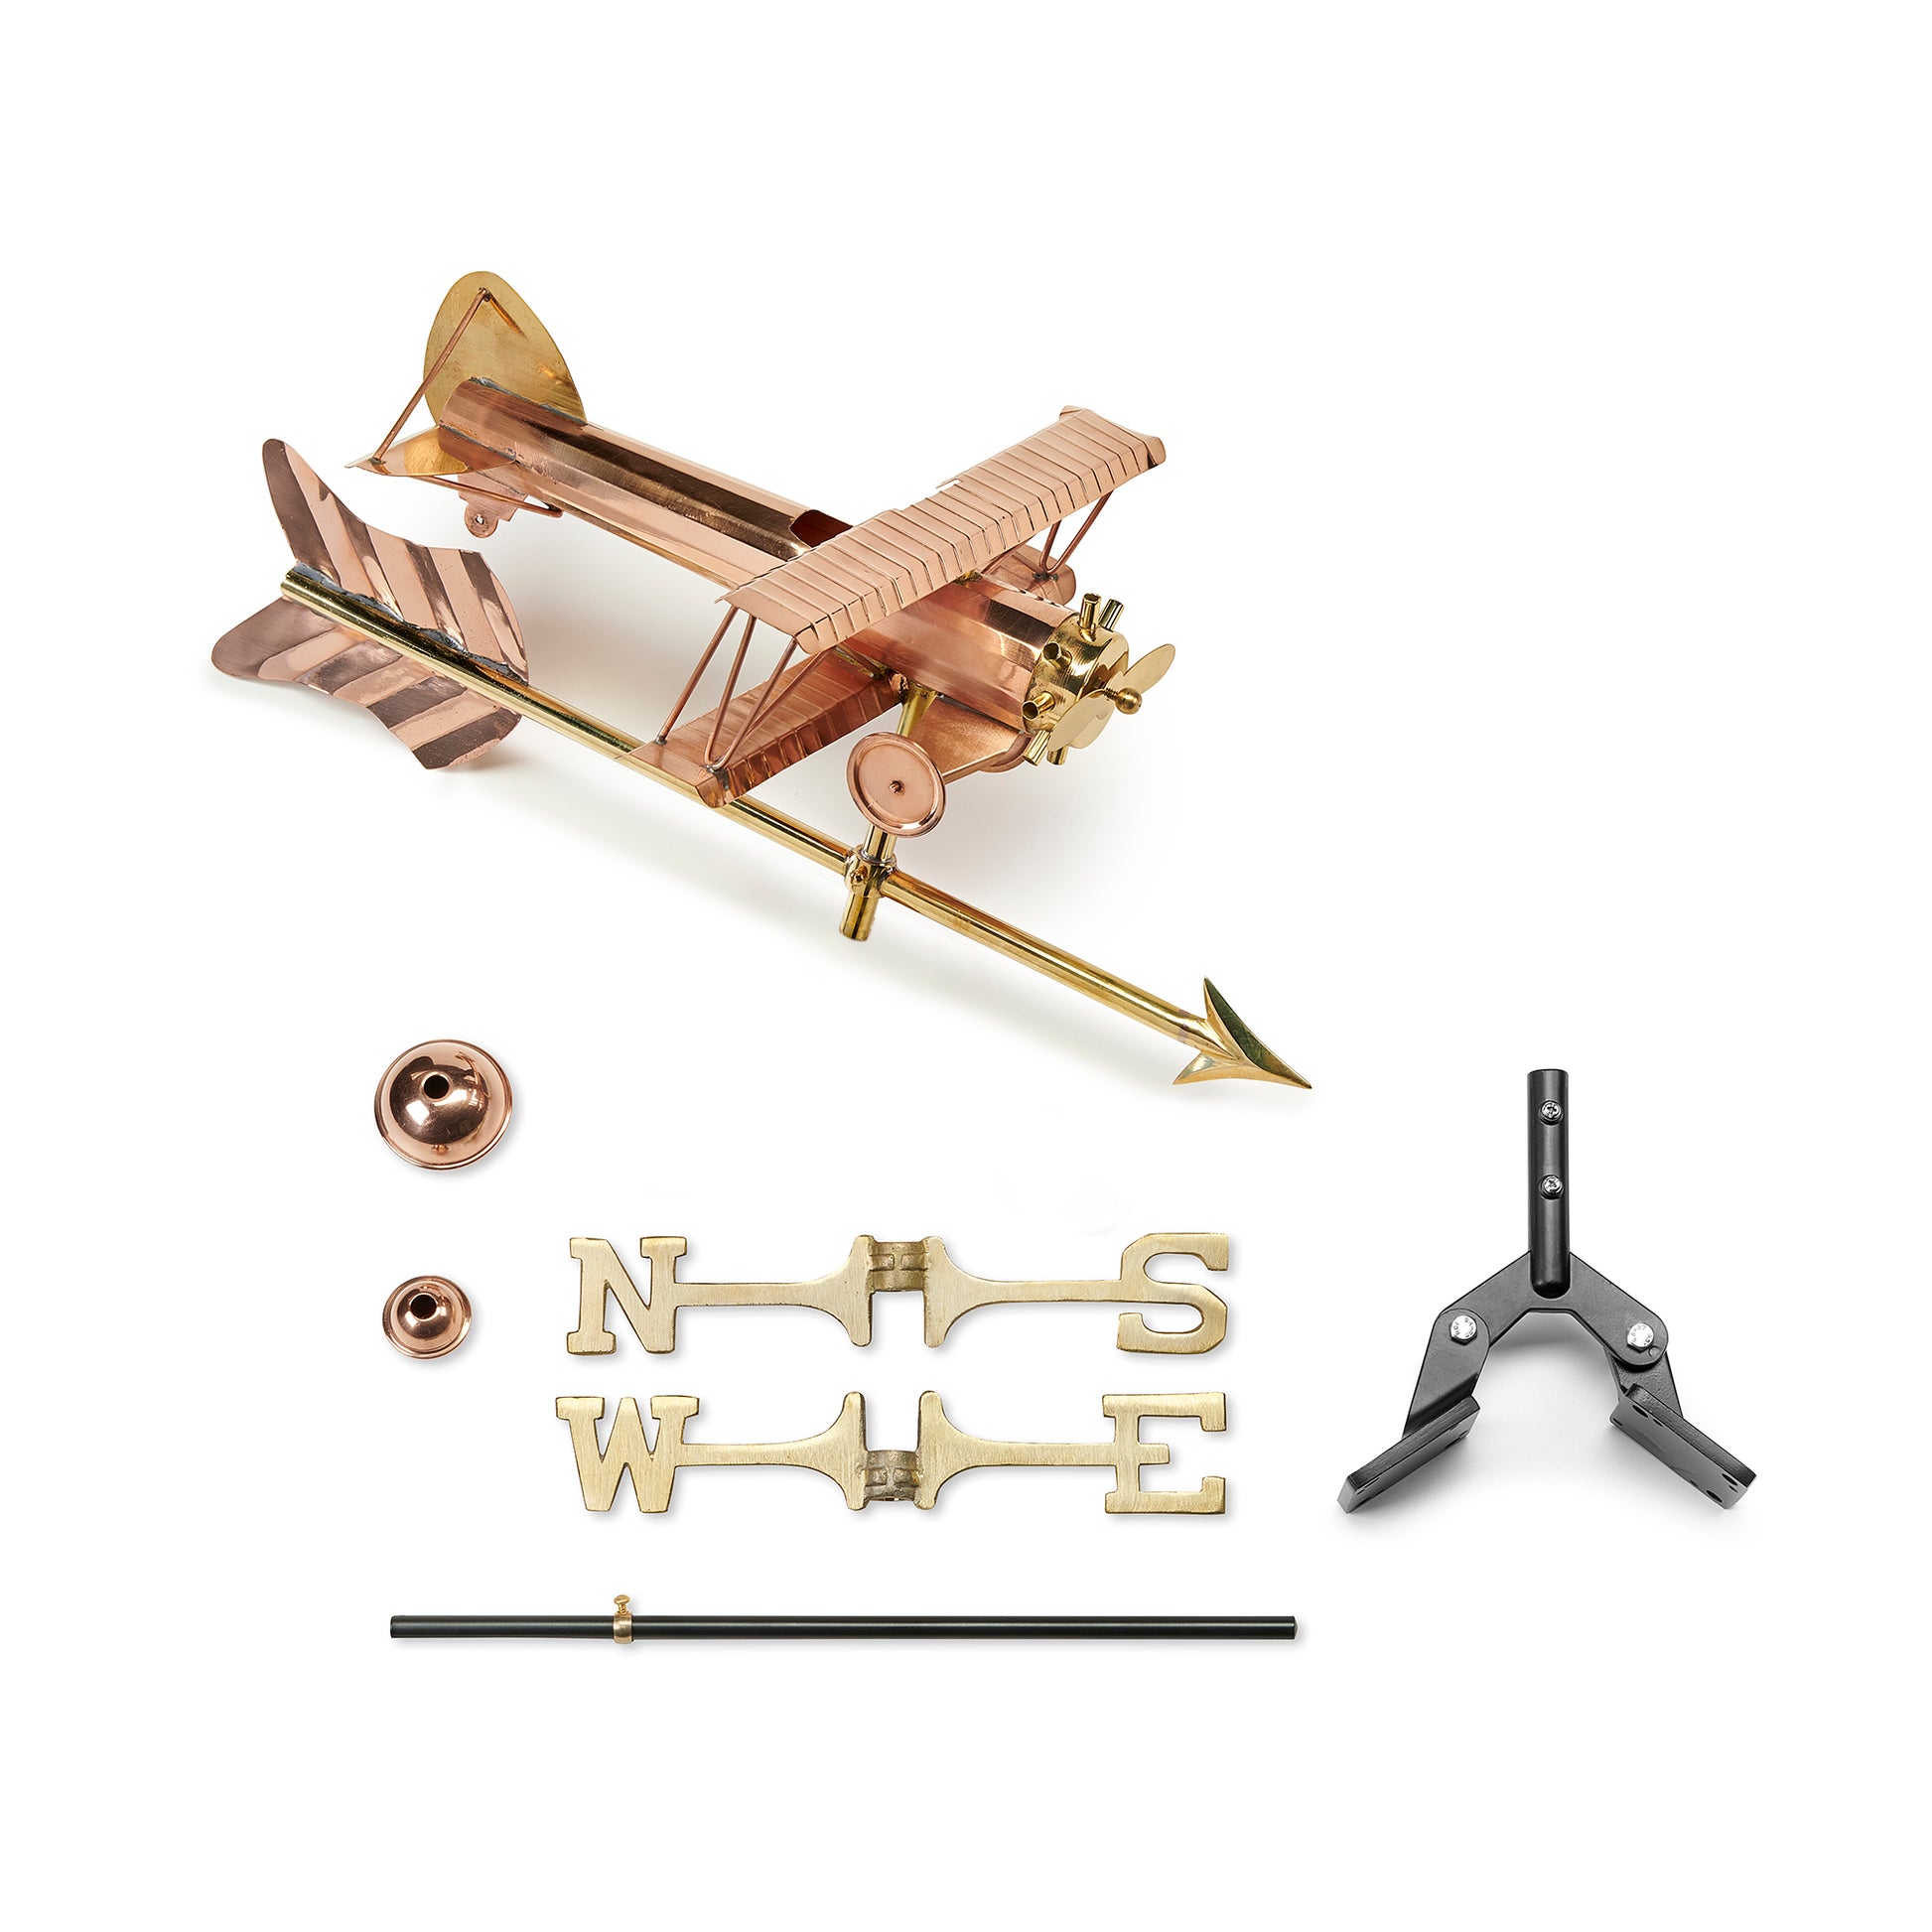 Biplane with Arrow Cottage Weathervane - Good Directions